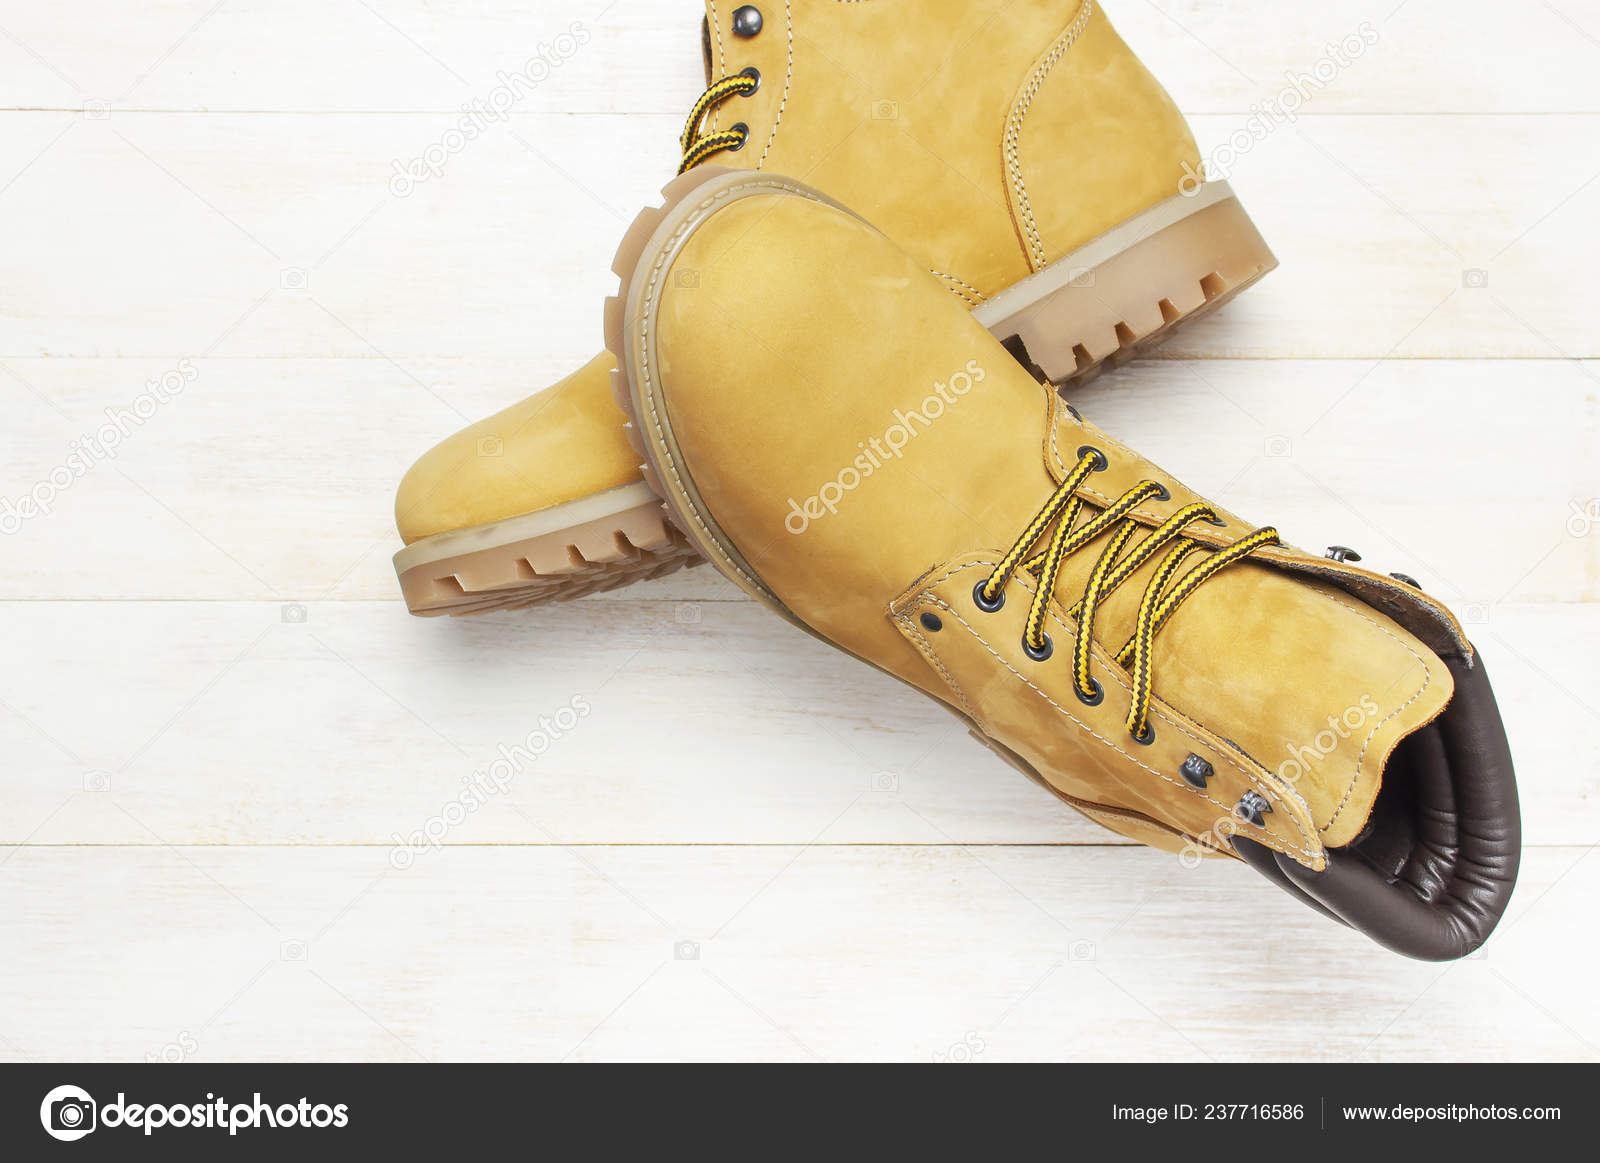 yellow flat boots